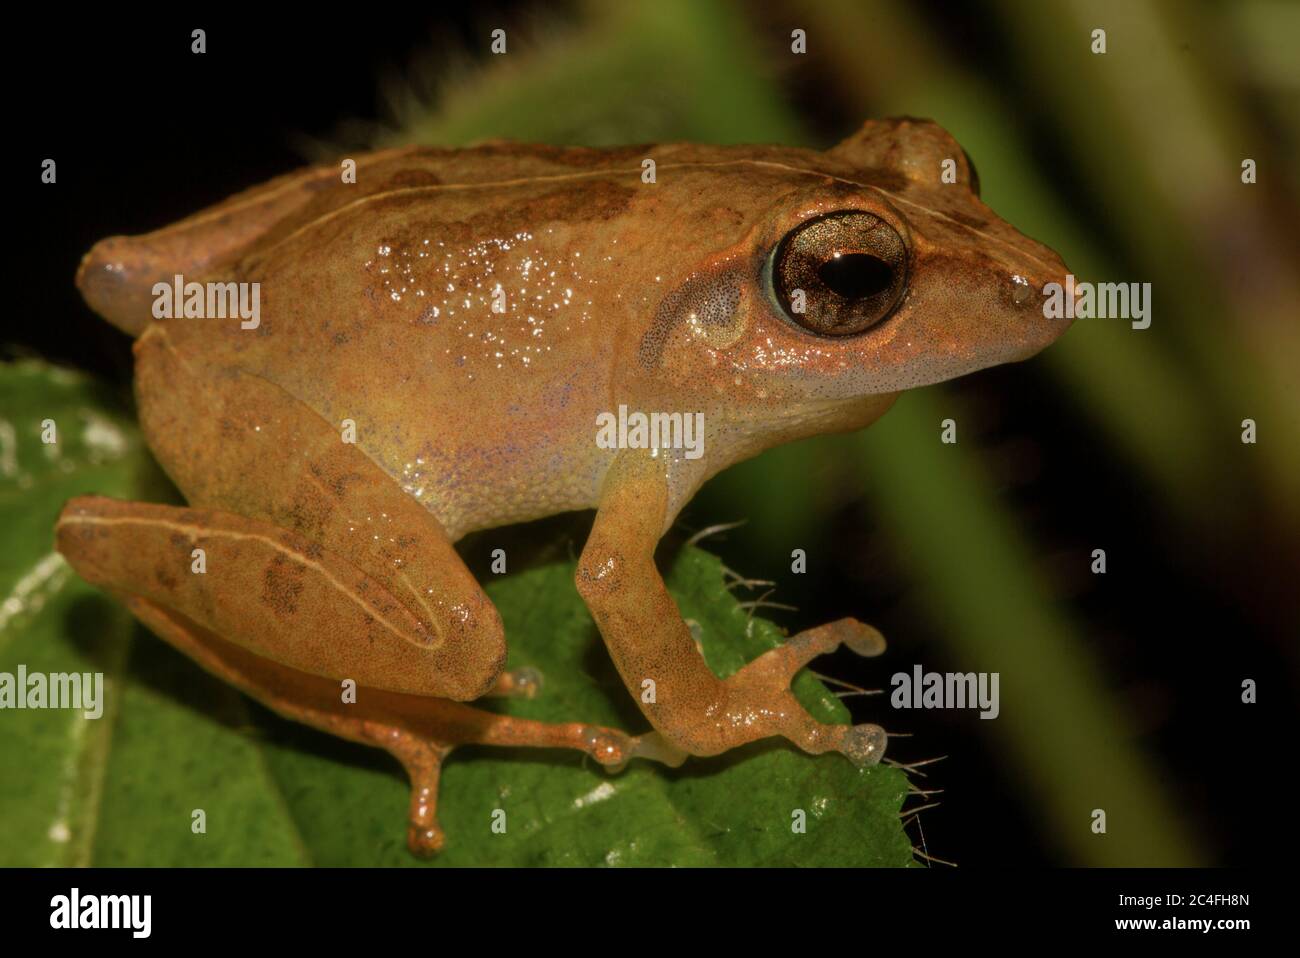 Brown frog on a leaf; tiny frog; cute froggy; Pseudophilautus schneideri from Sri lanka; Endemic to Sri Lanka, Schneider's Shrub frog Stock Photo